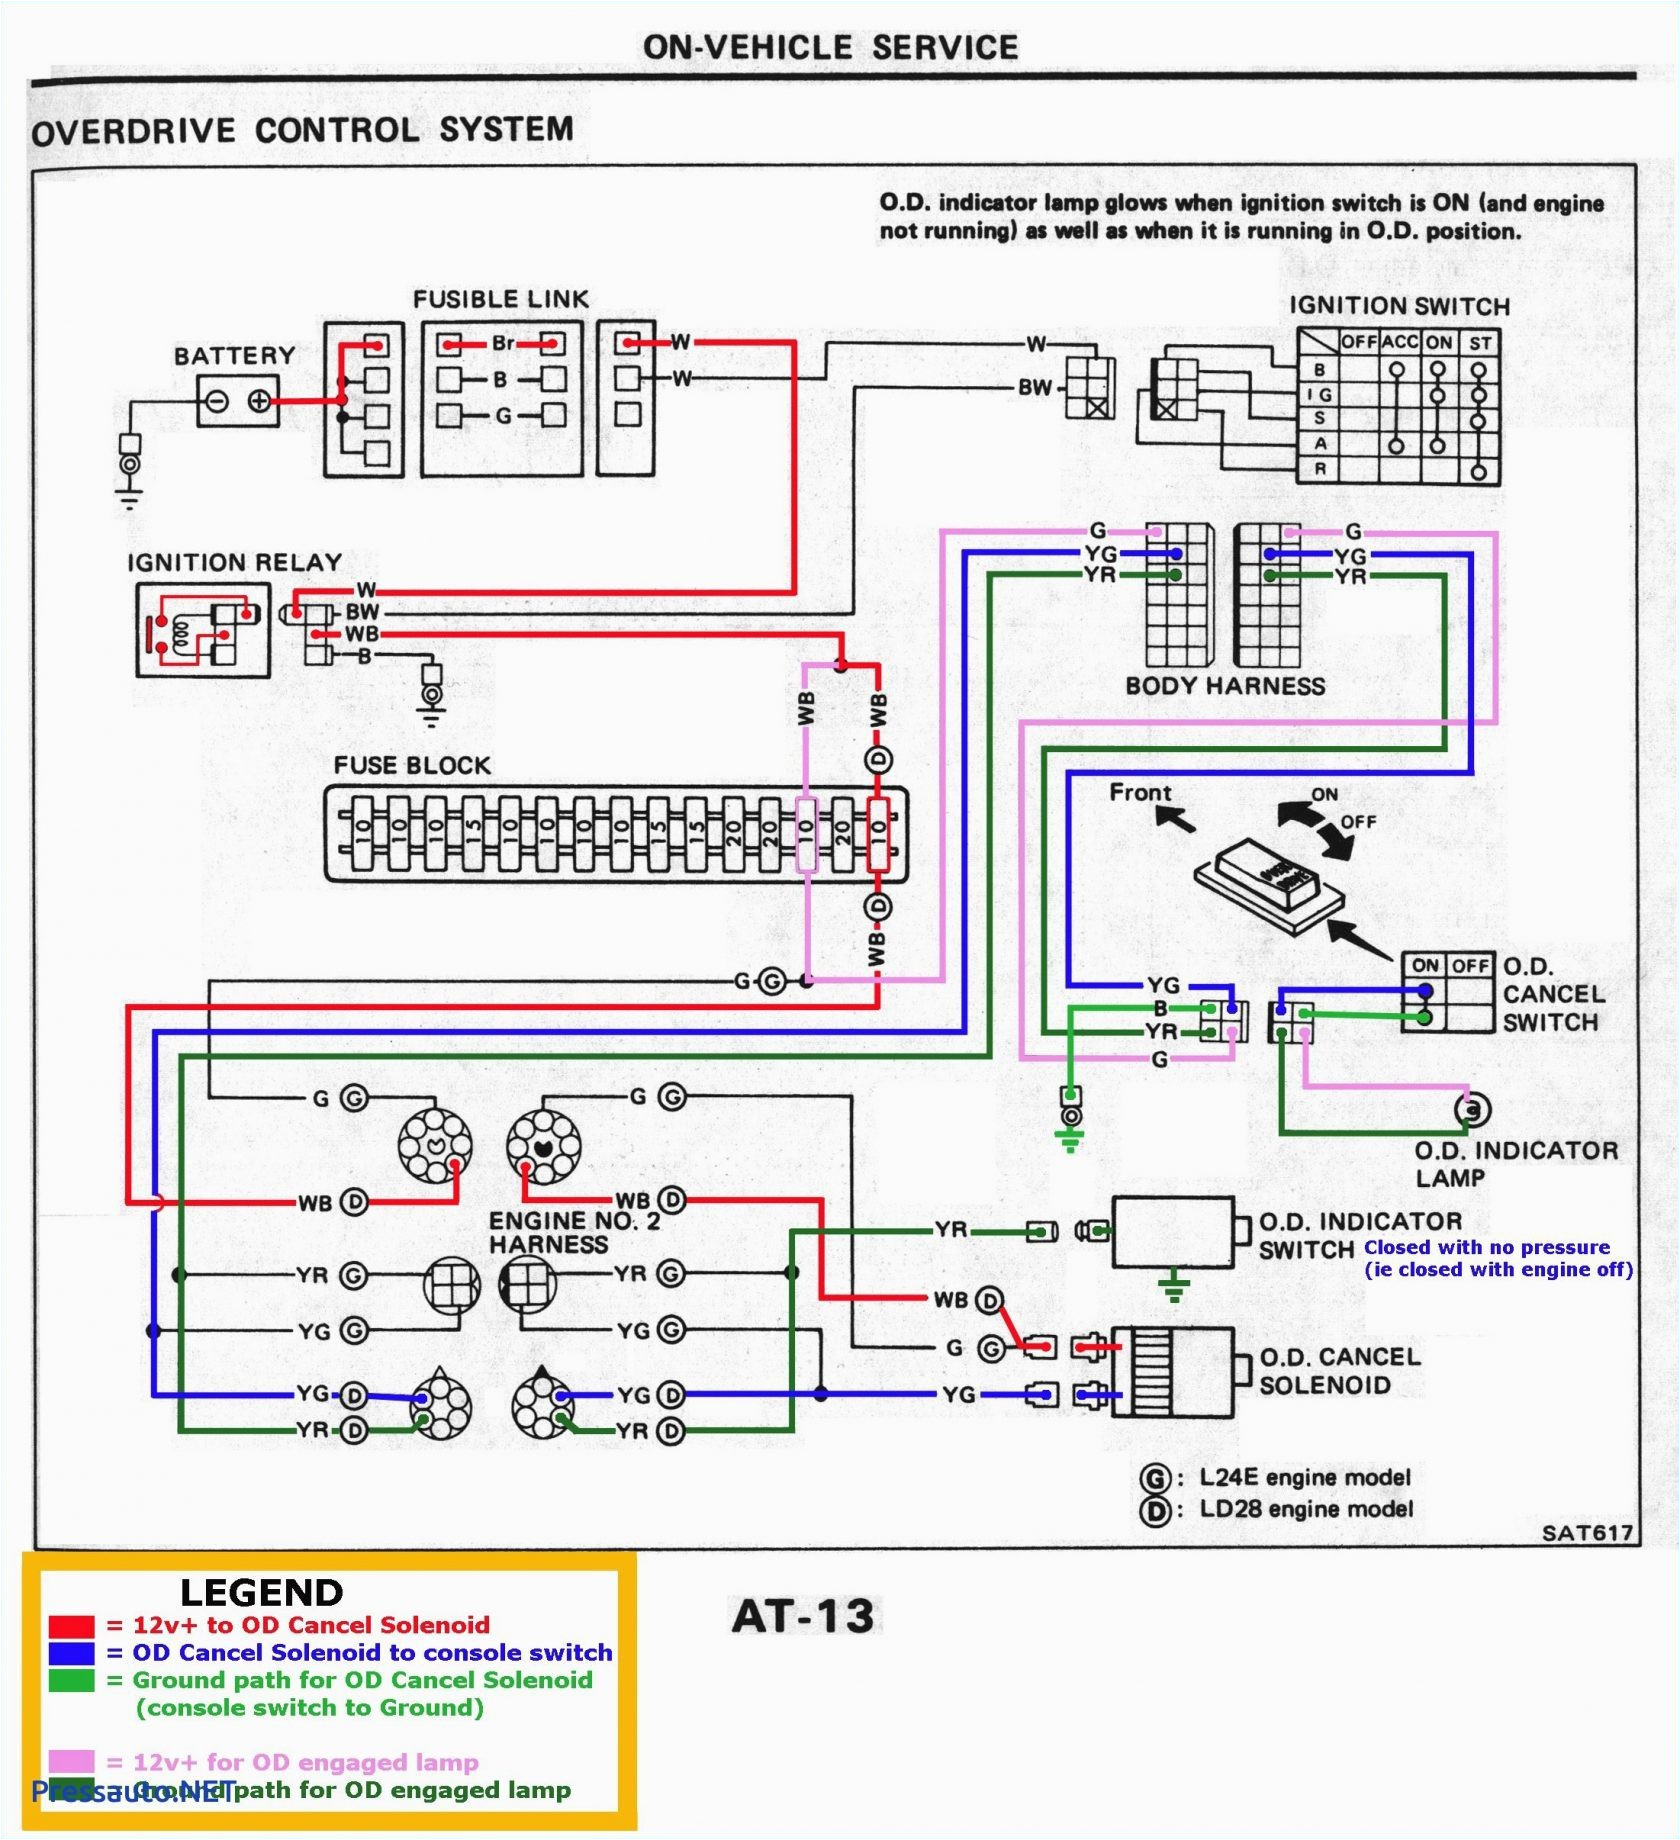 mecc alte wiring diagram option wiring diagram mecc alte spa wiring diagram wiring diagram mecc alte